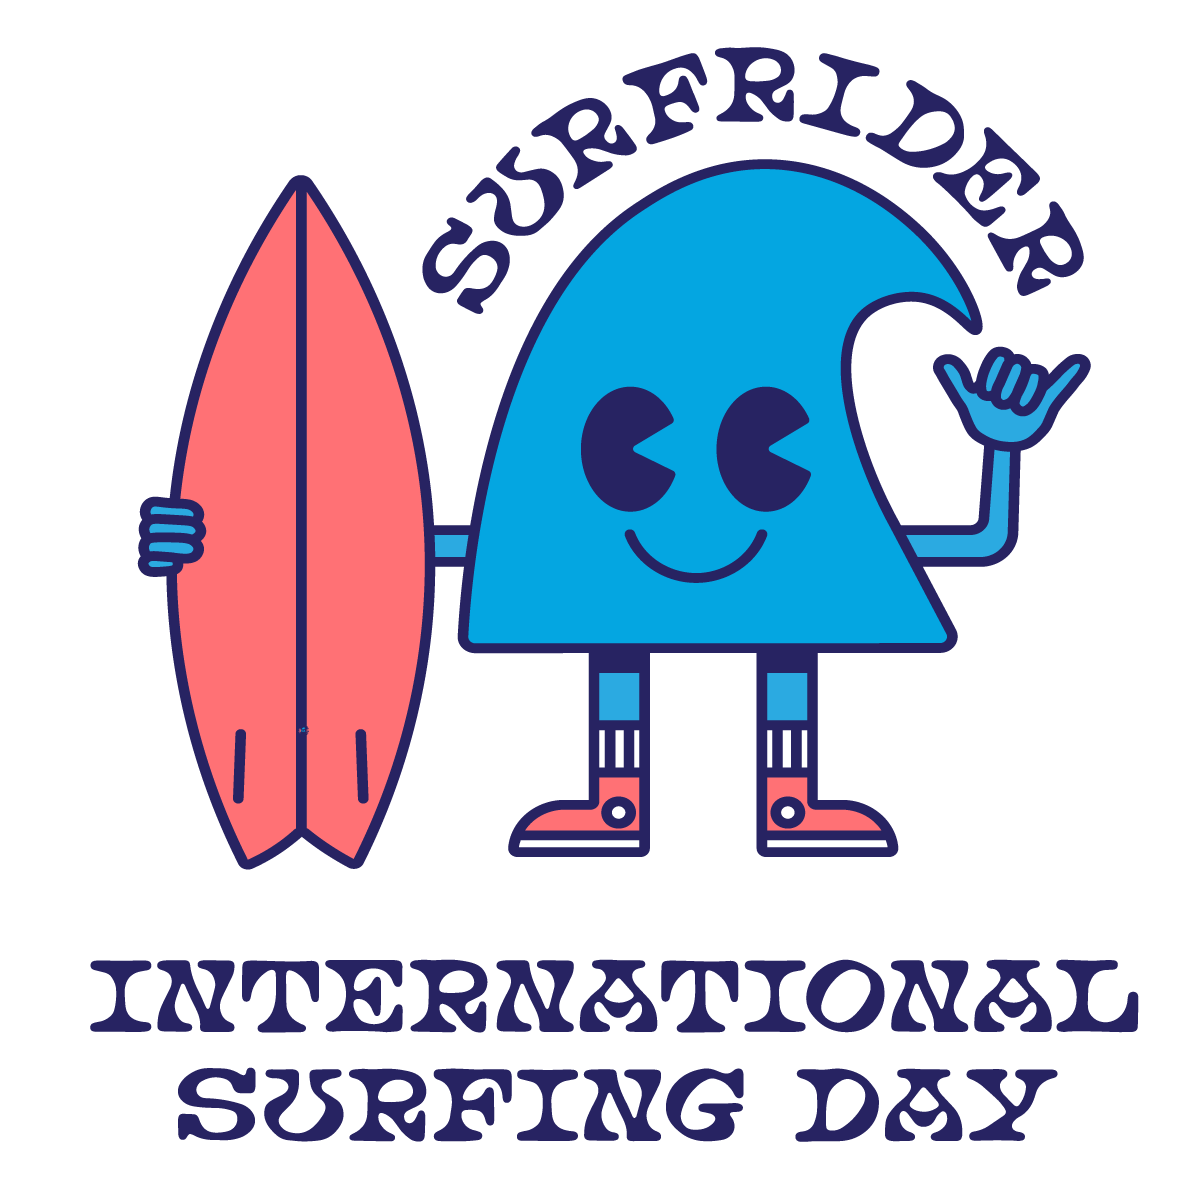 International Surfing Day 2022 official artwork